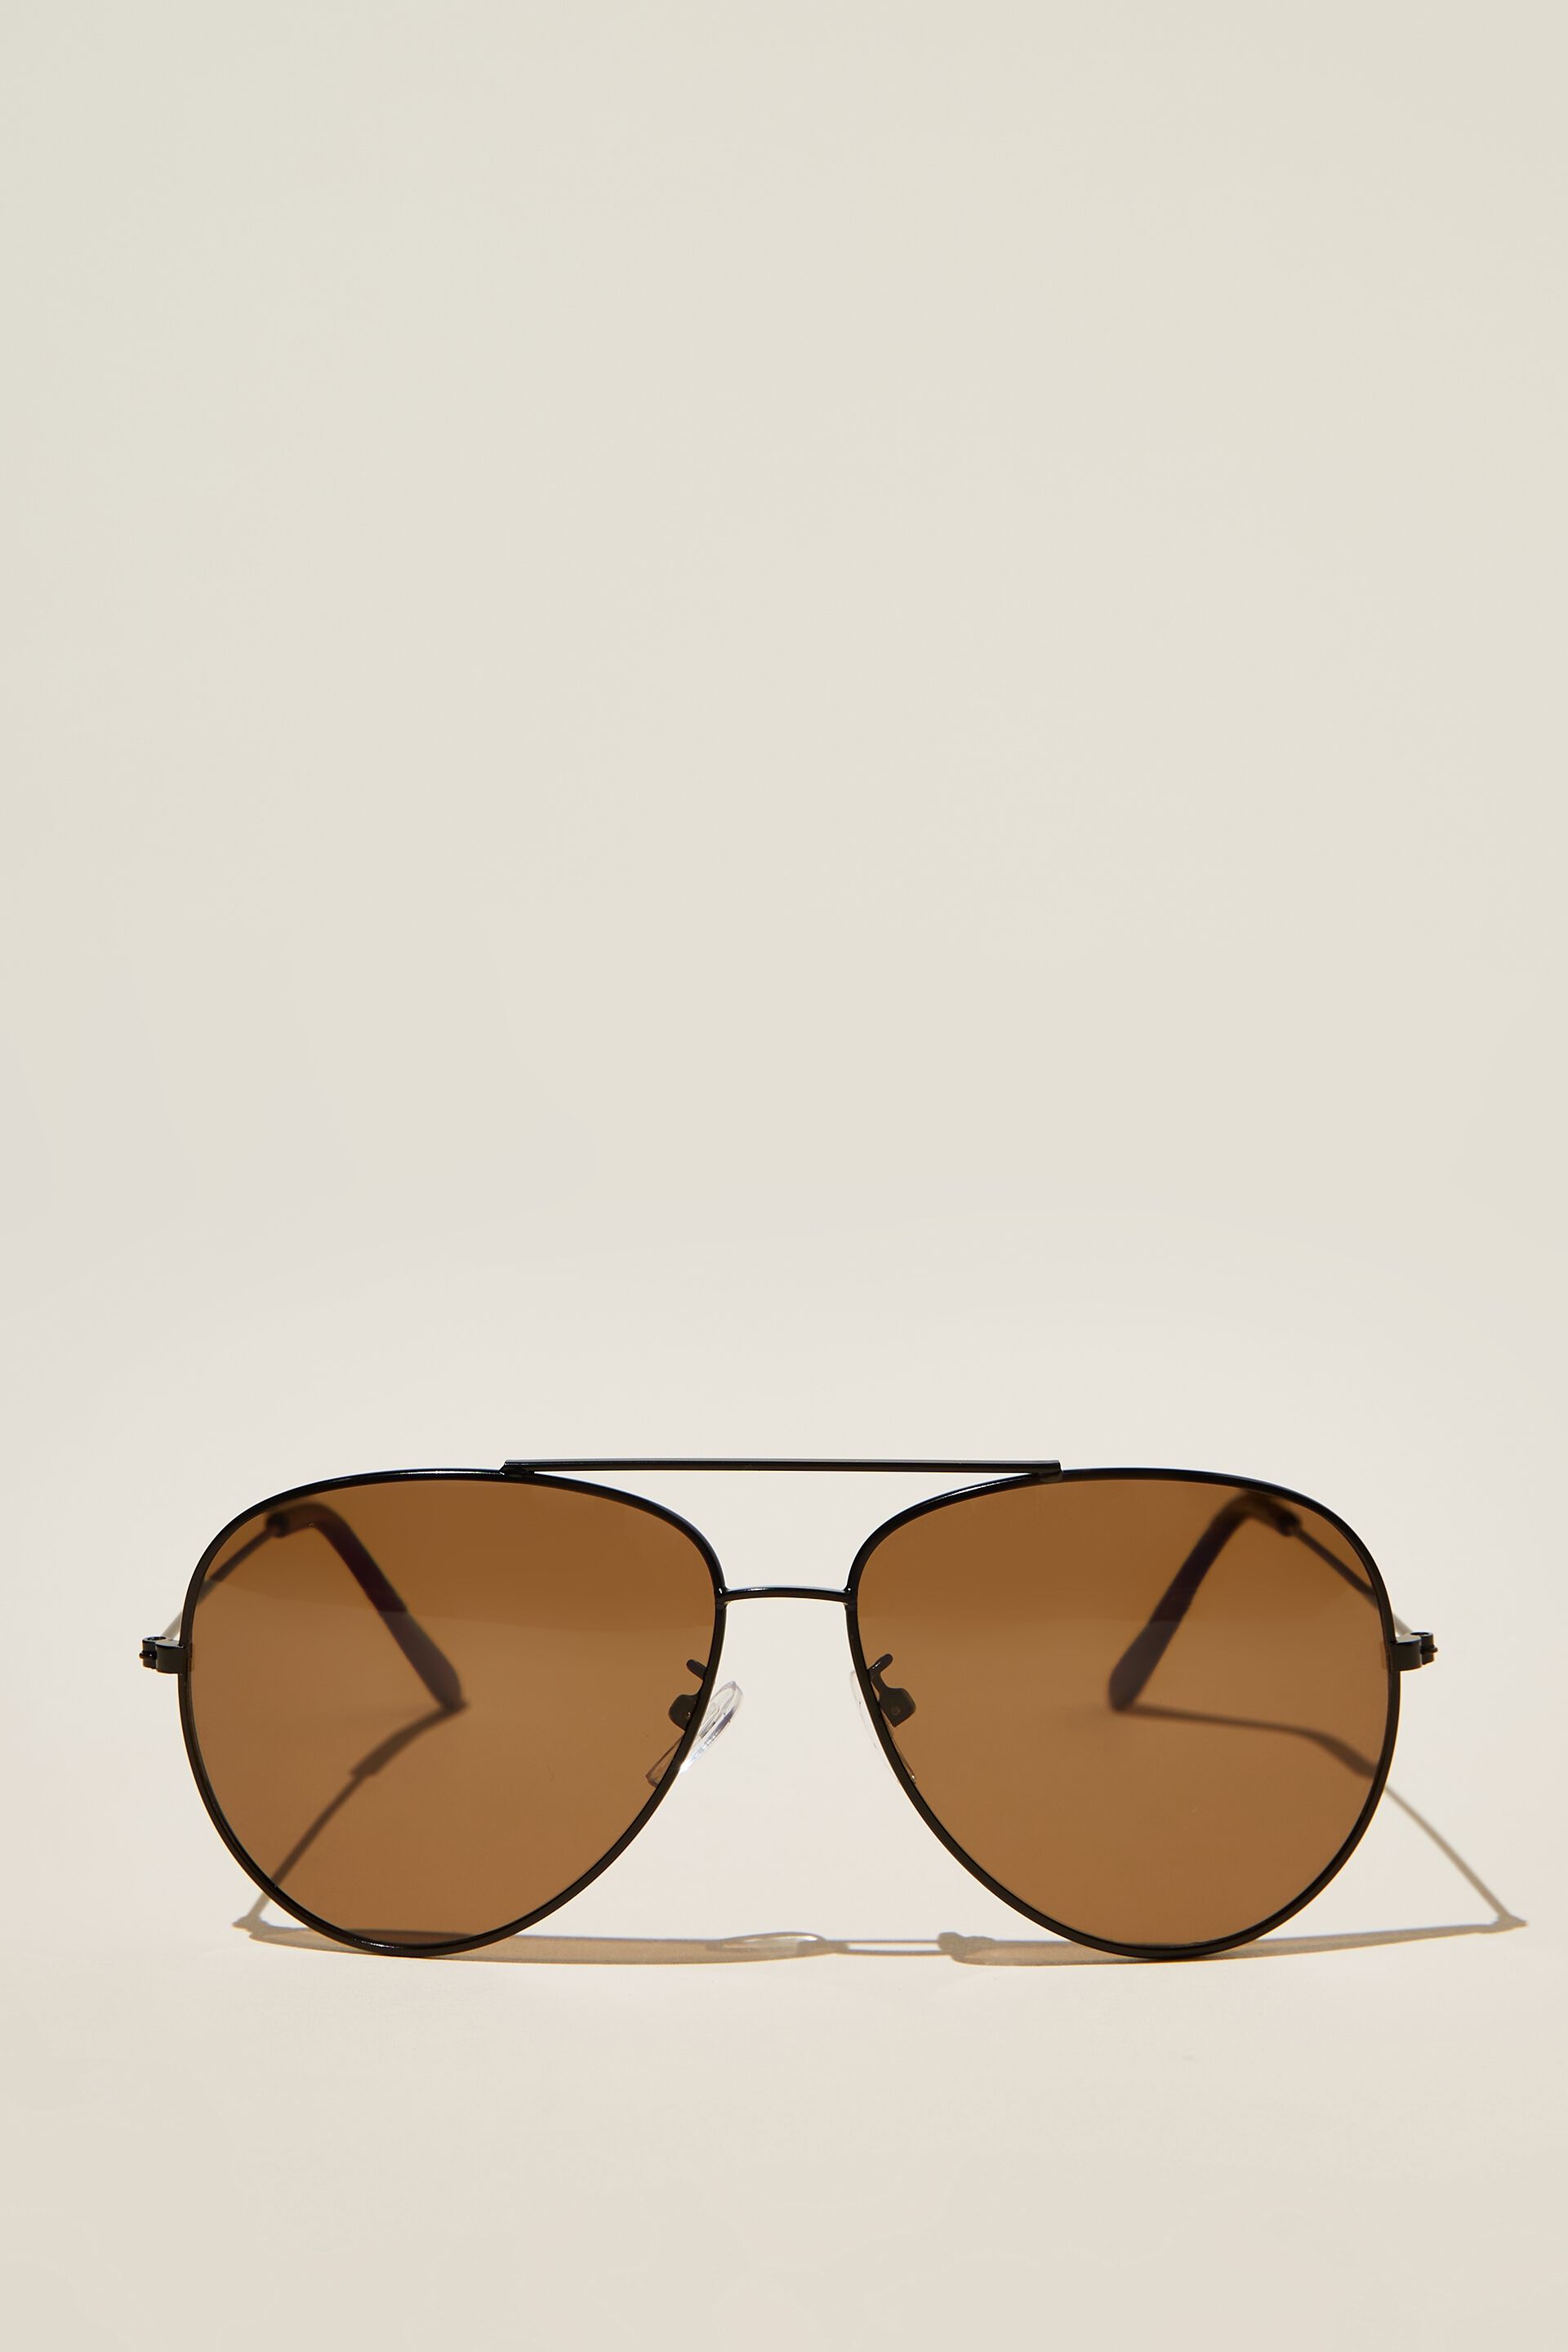 Marshall Polarized Sunglasses